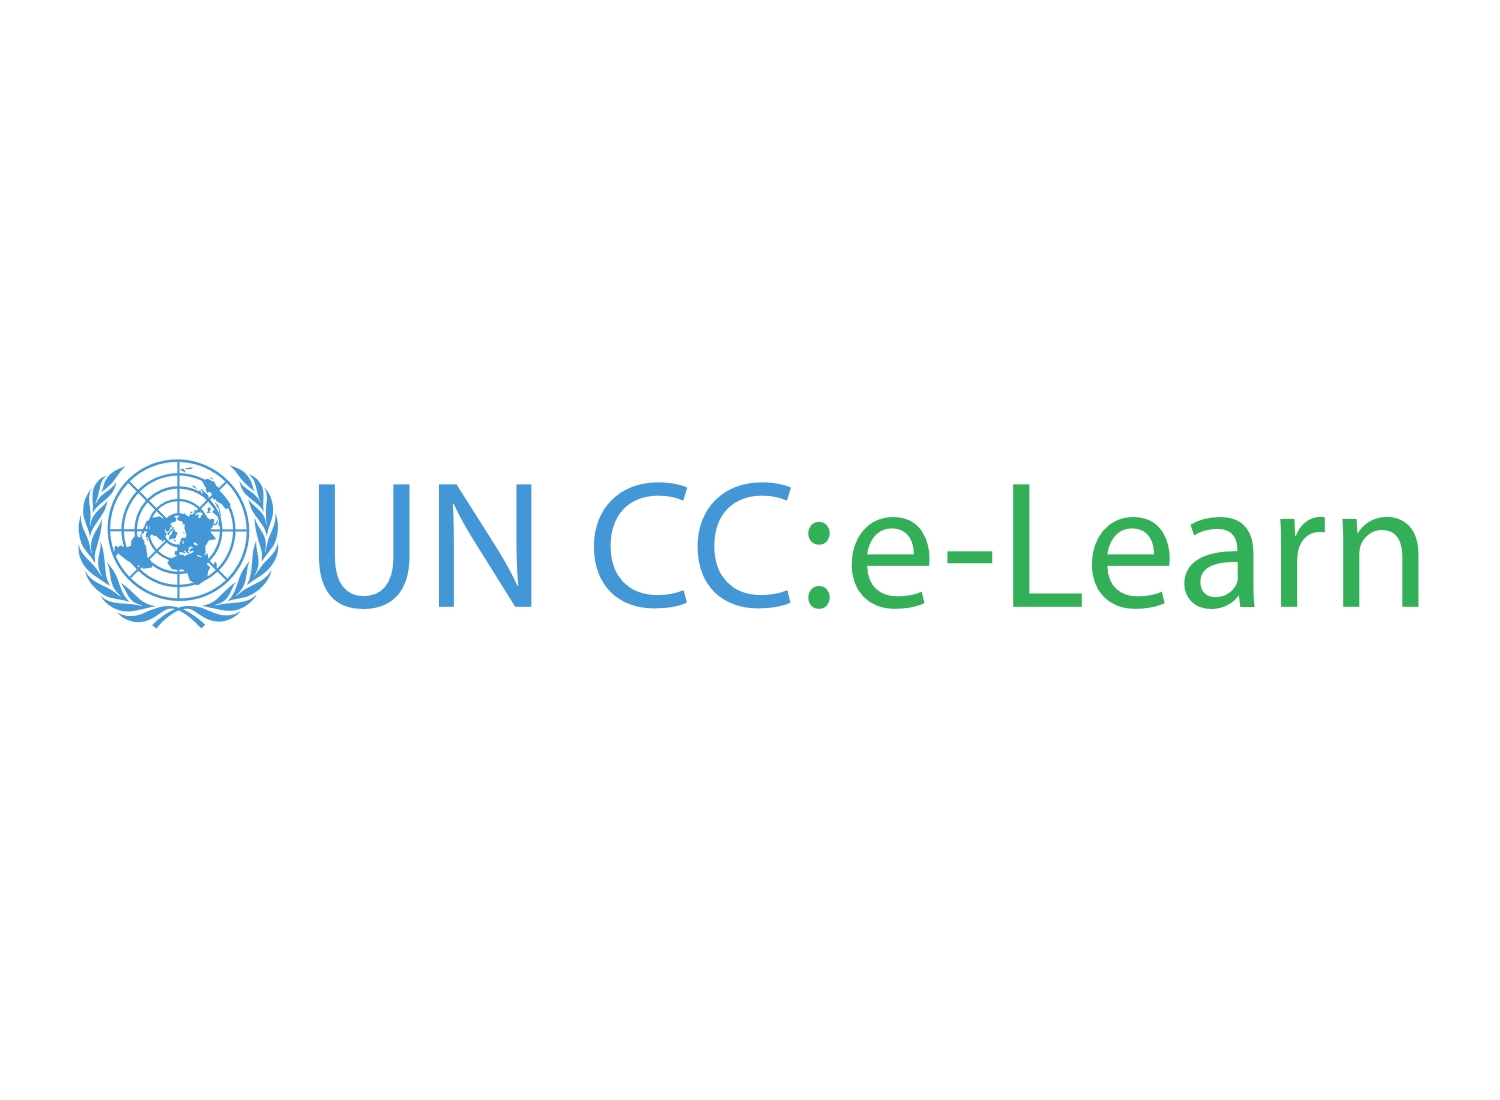 UN CC:Learn